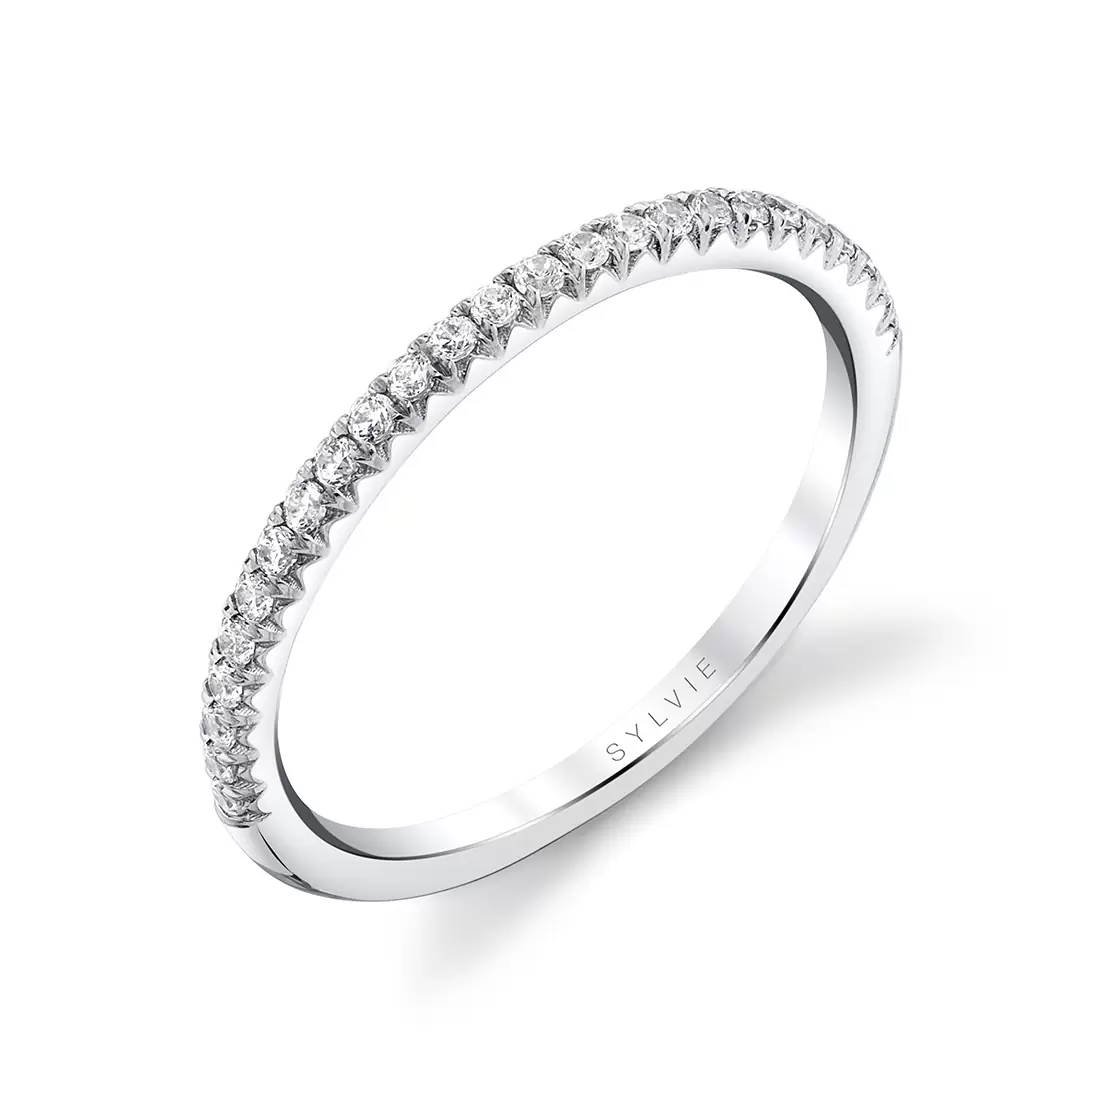 White gold, diamond classic wedding ring